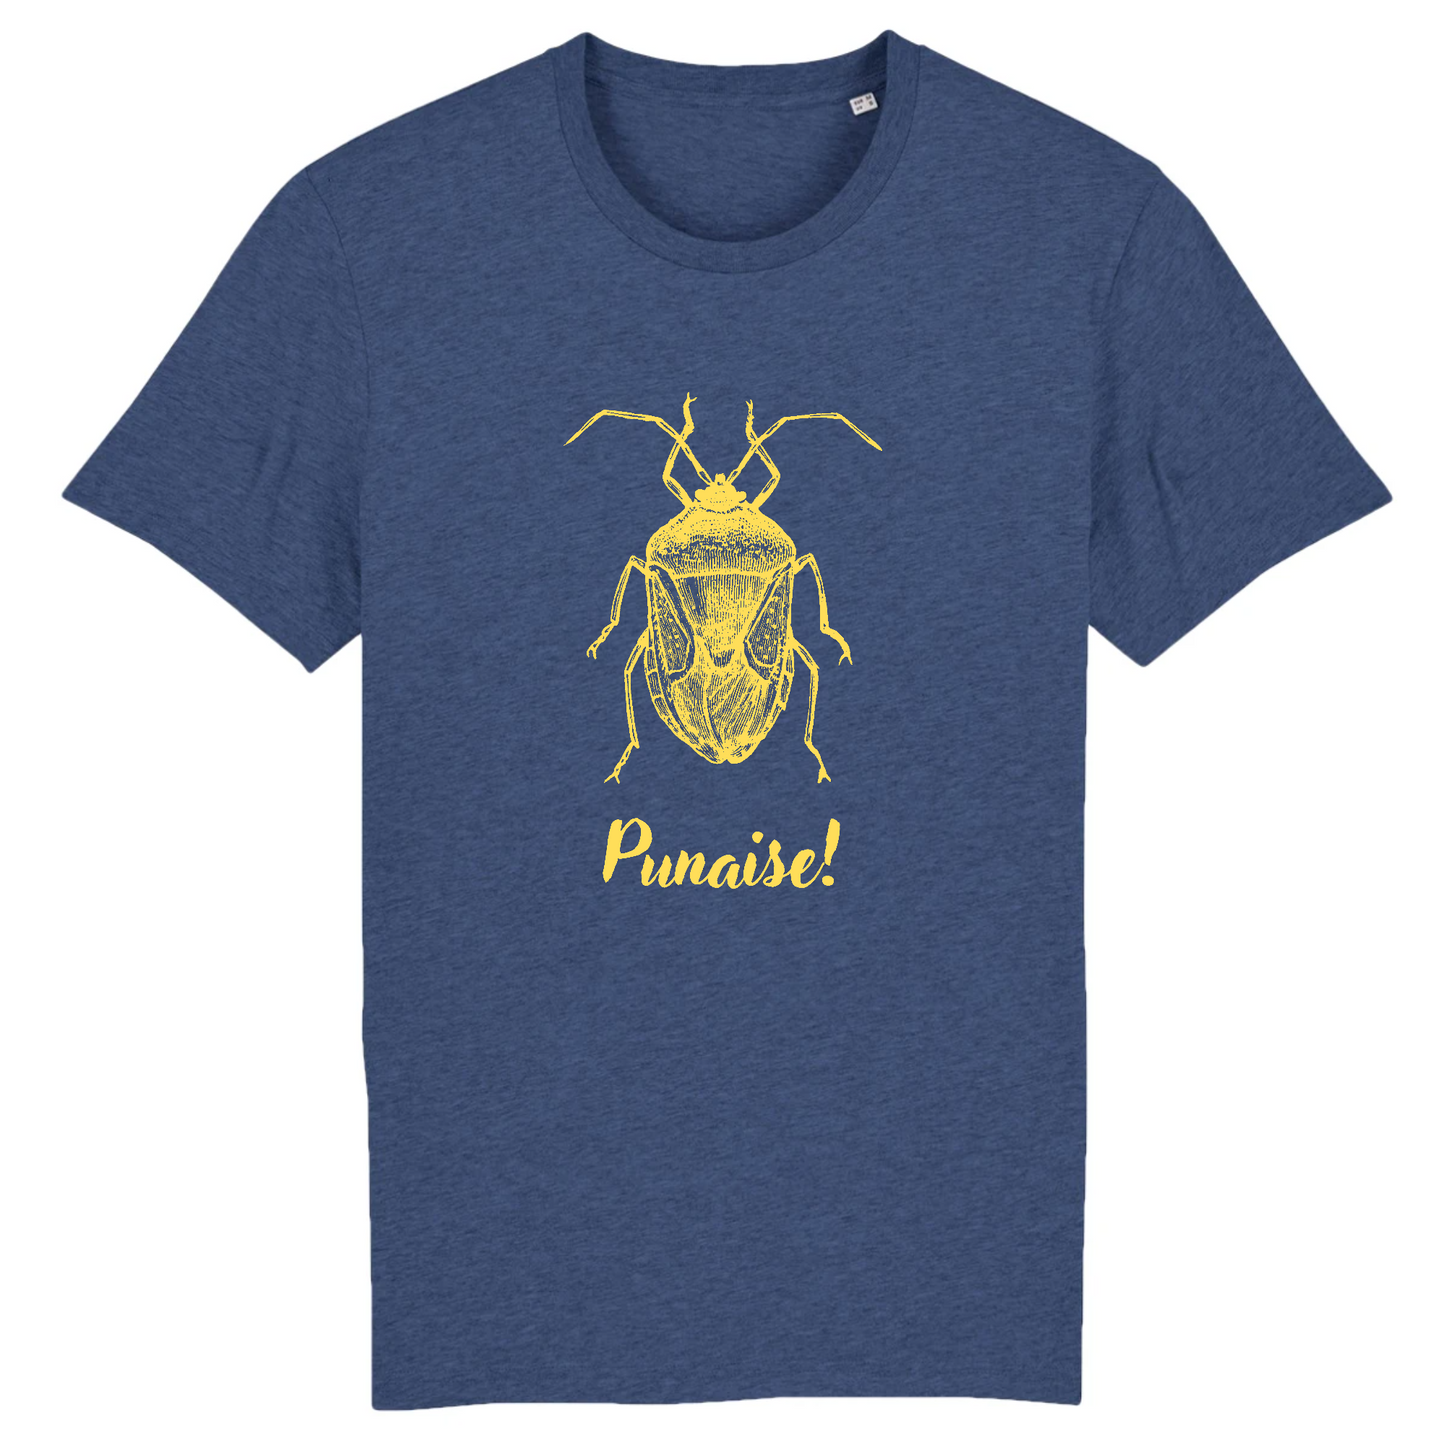 Punaise! | T-shirt Unisexe - Coton BIO - CREATOR | Indigo